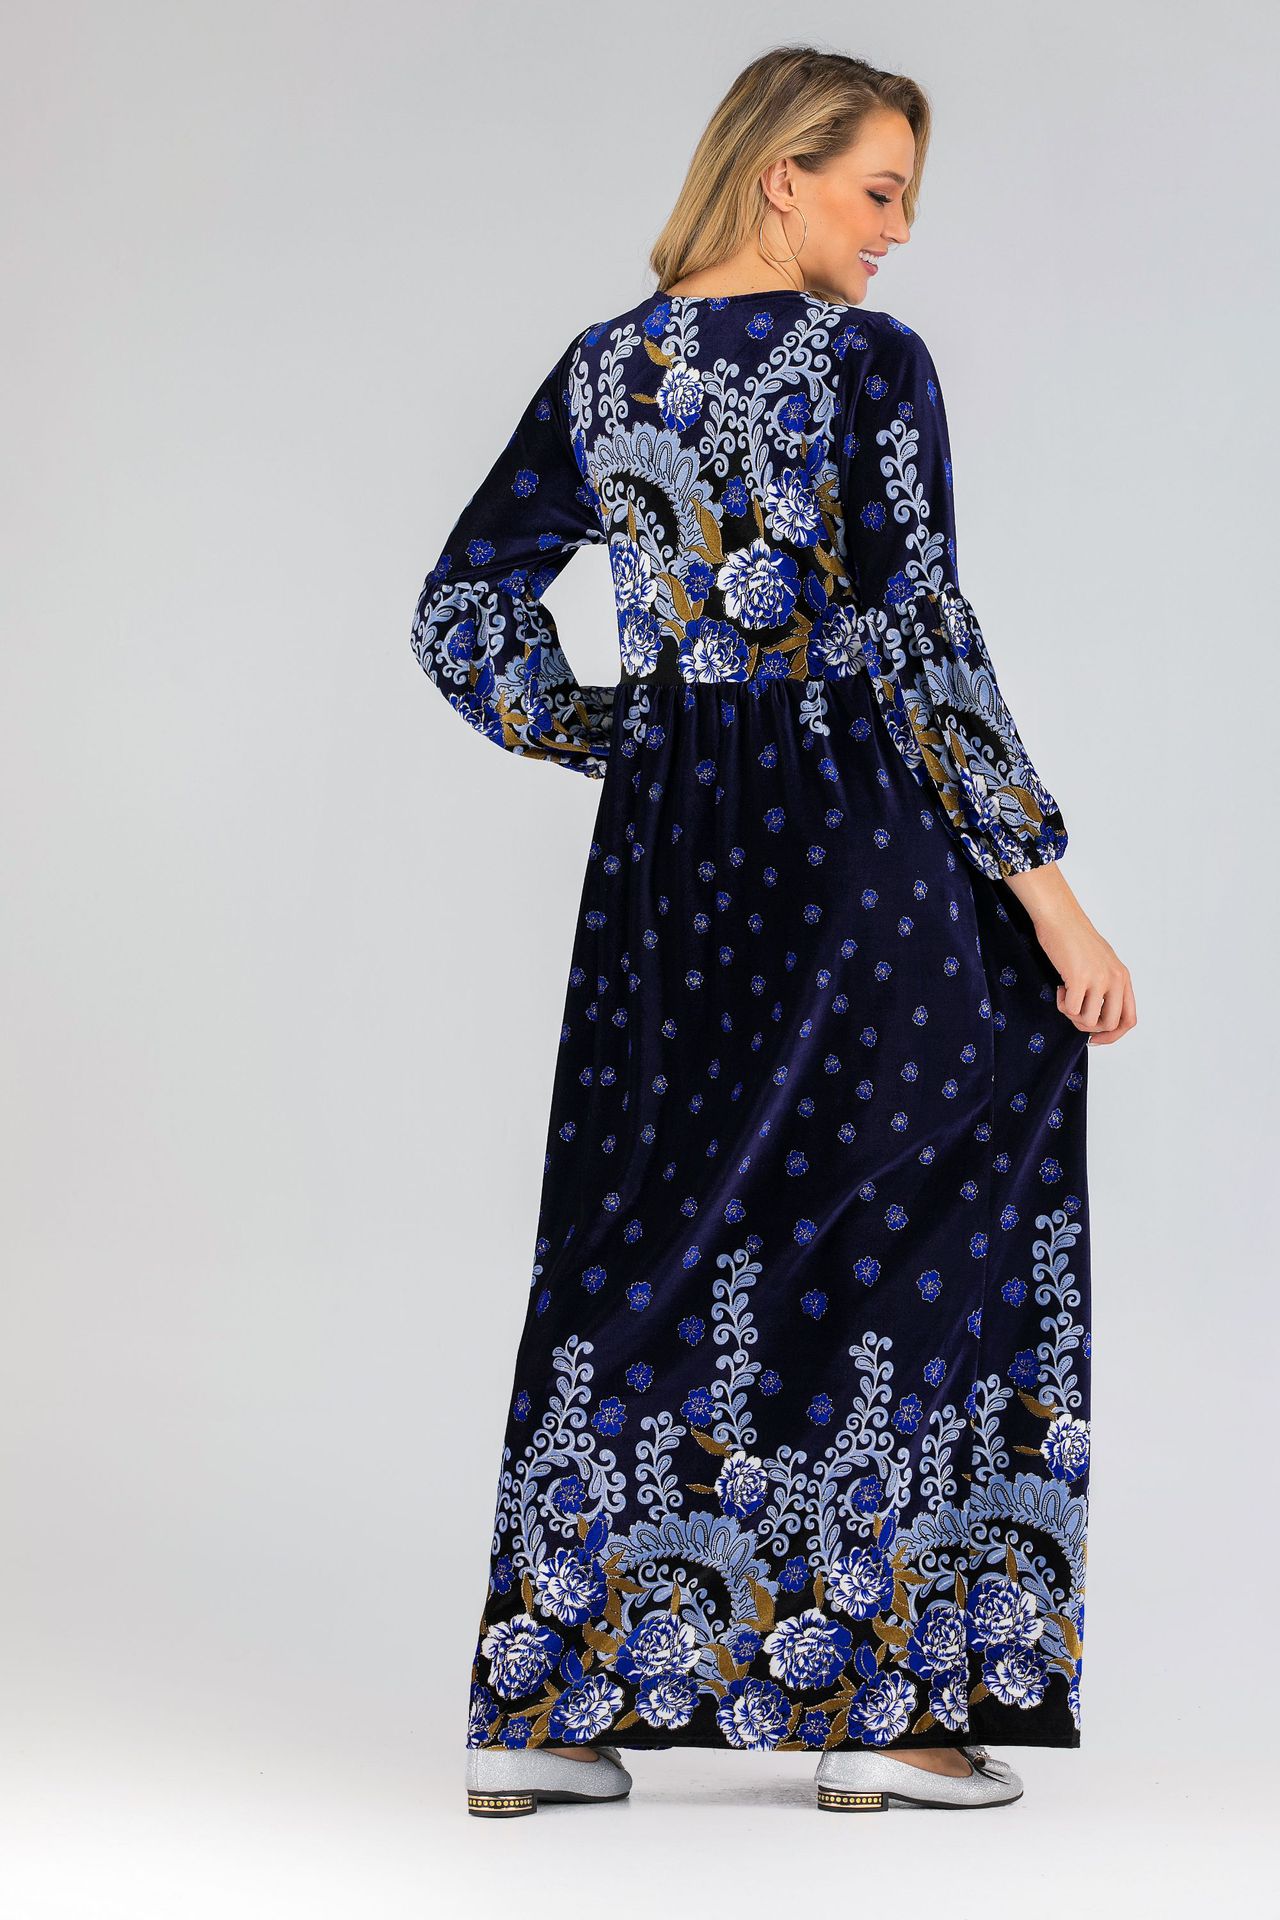 Plus Size Muslim Hijab Dress Women Floral Print Abaya Party Velvet Dresses Dubai Arab Long Robe Kaftan Turkey Islamic Clothing